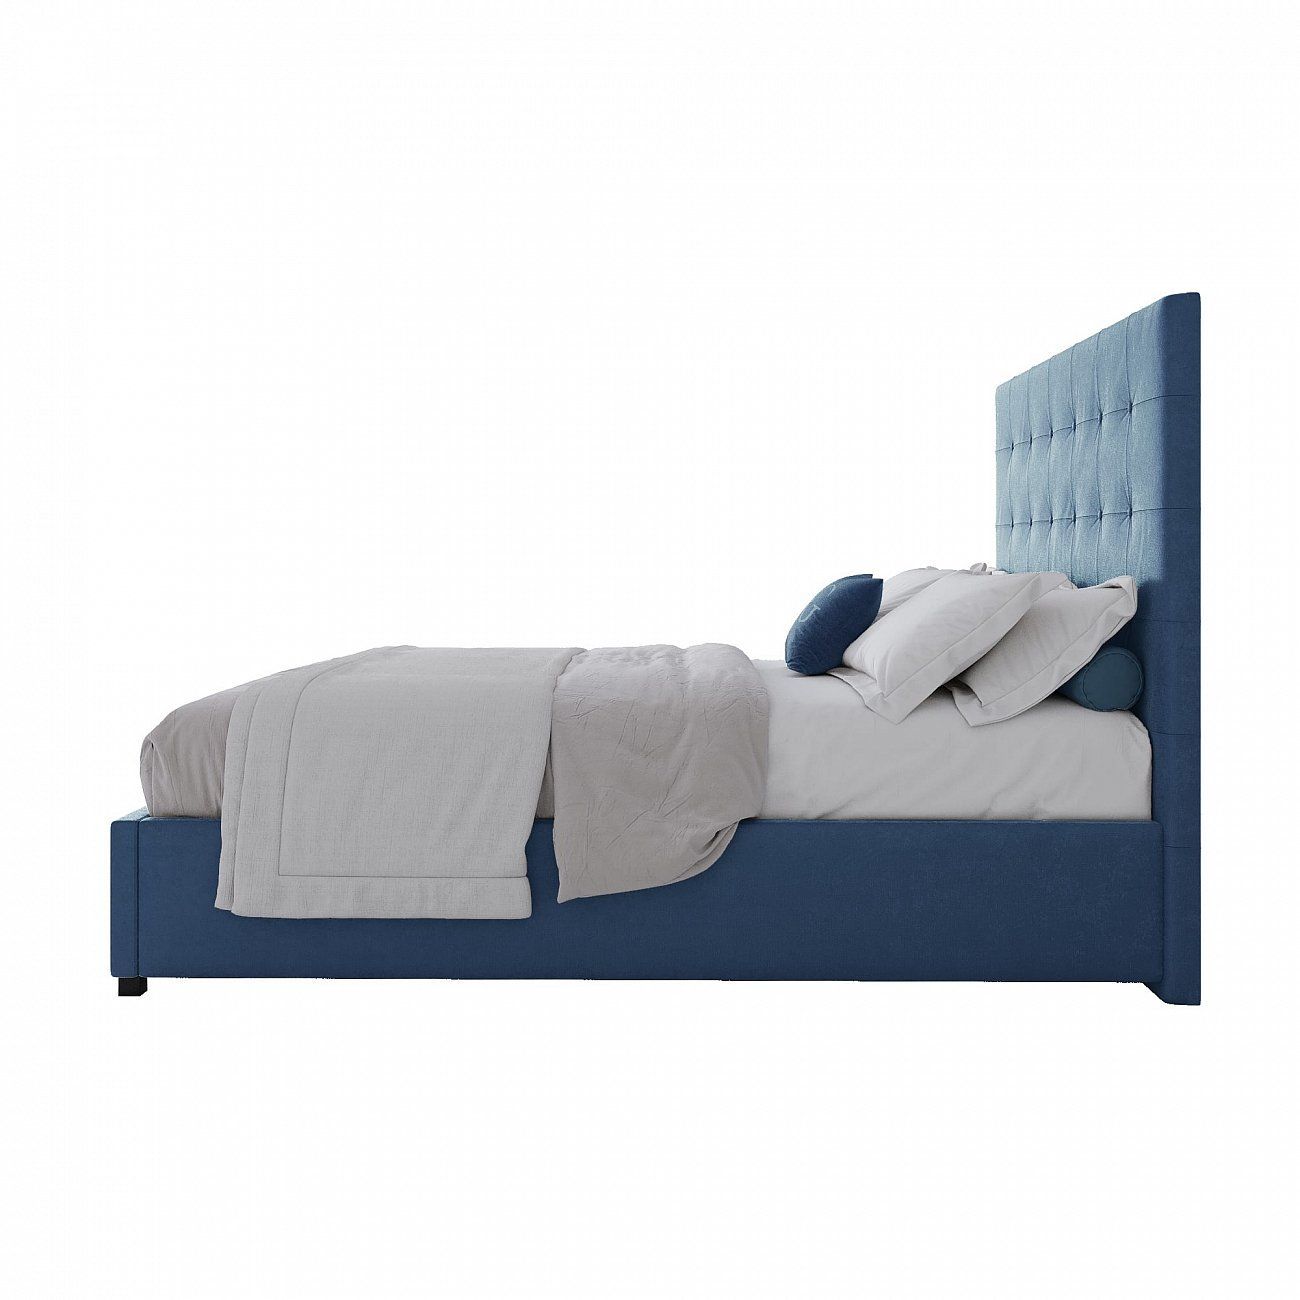 Semi-double teenage bed with a soft headboard 140x200 cm sea wave Royal Black